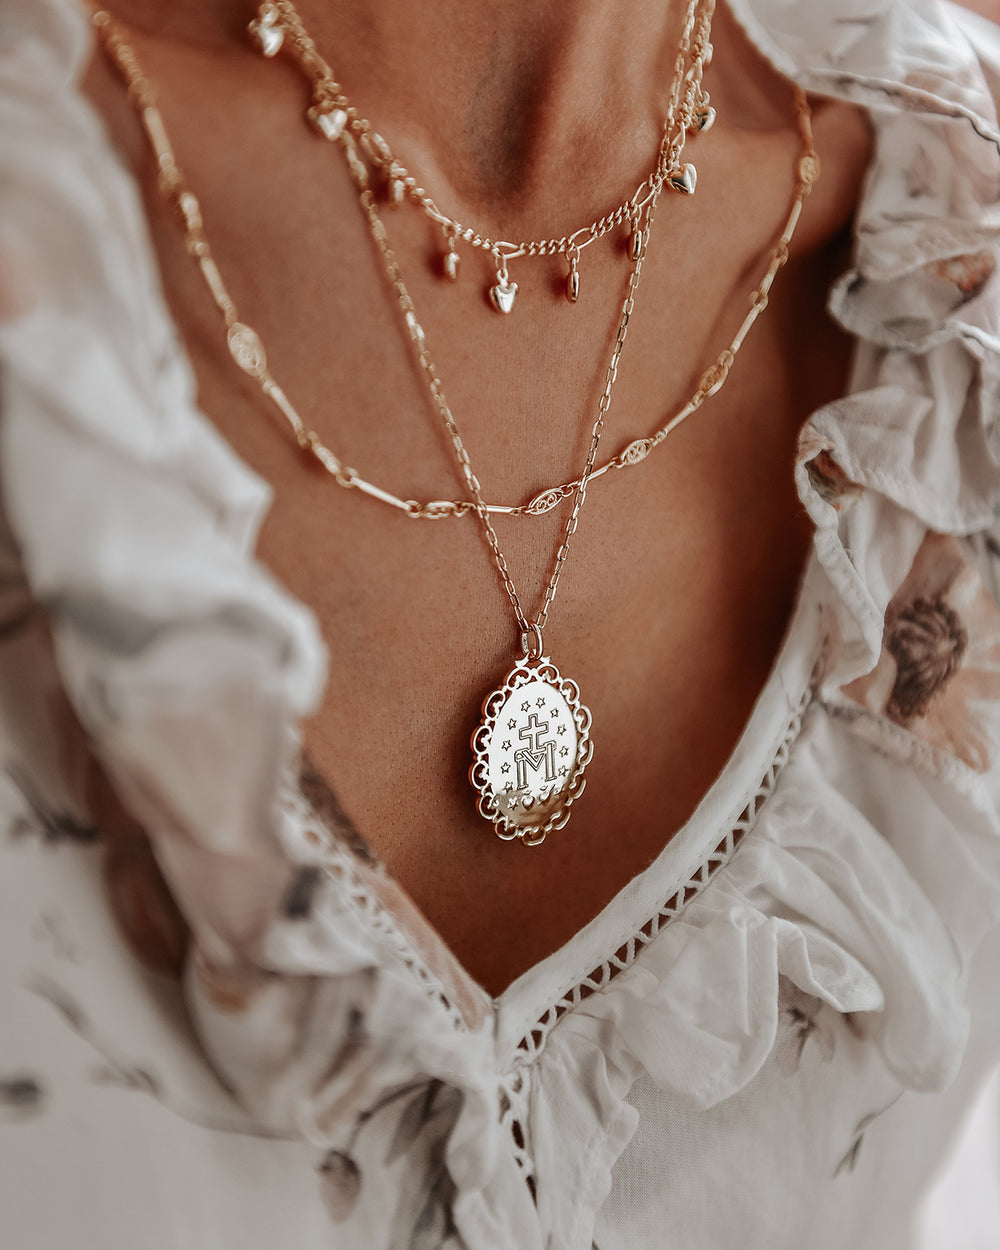 Drew Fancy Chain Necklace